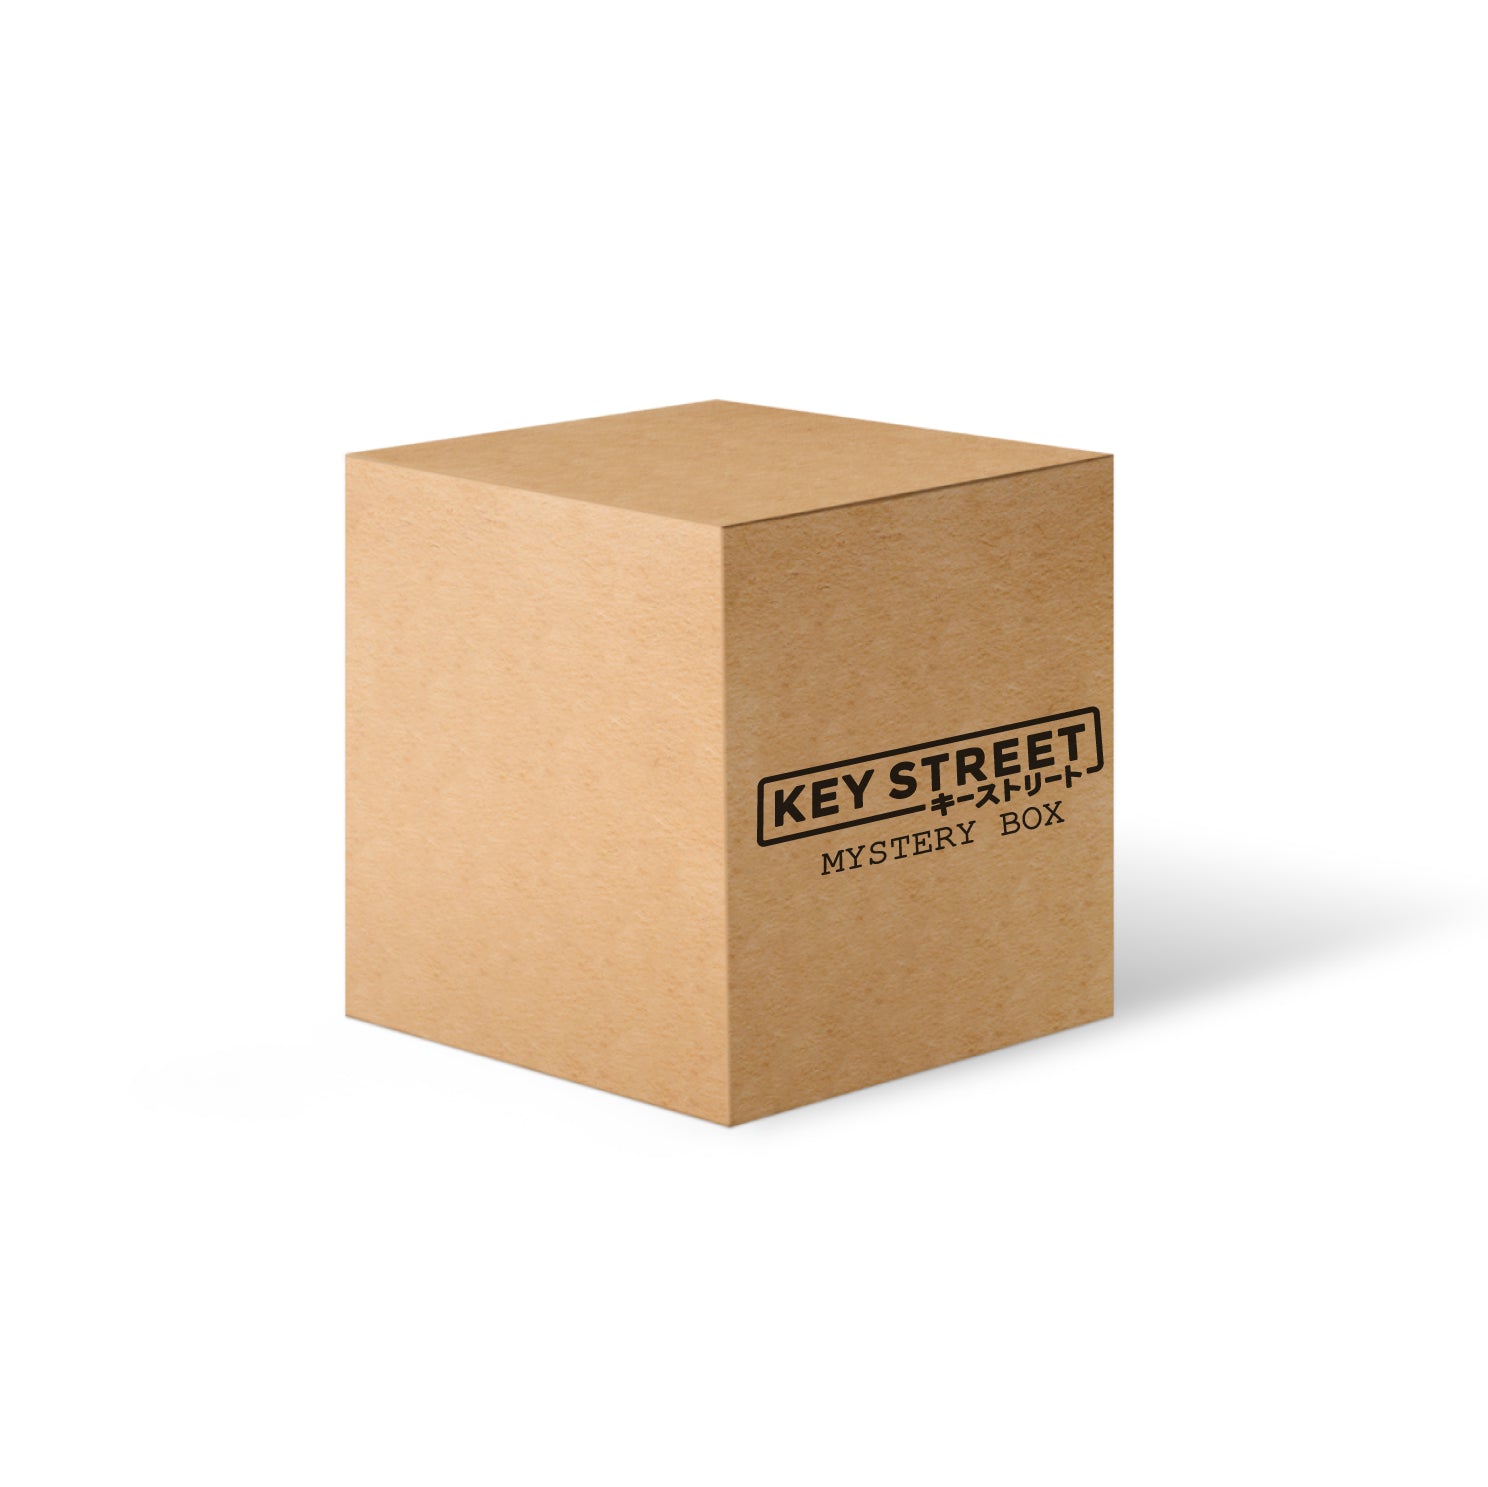 The Key Street Mystery Box